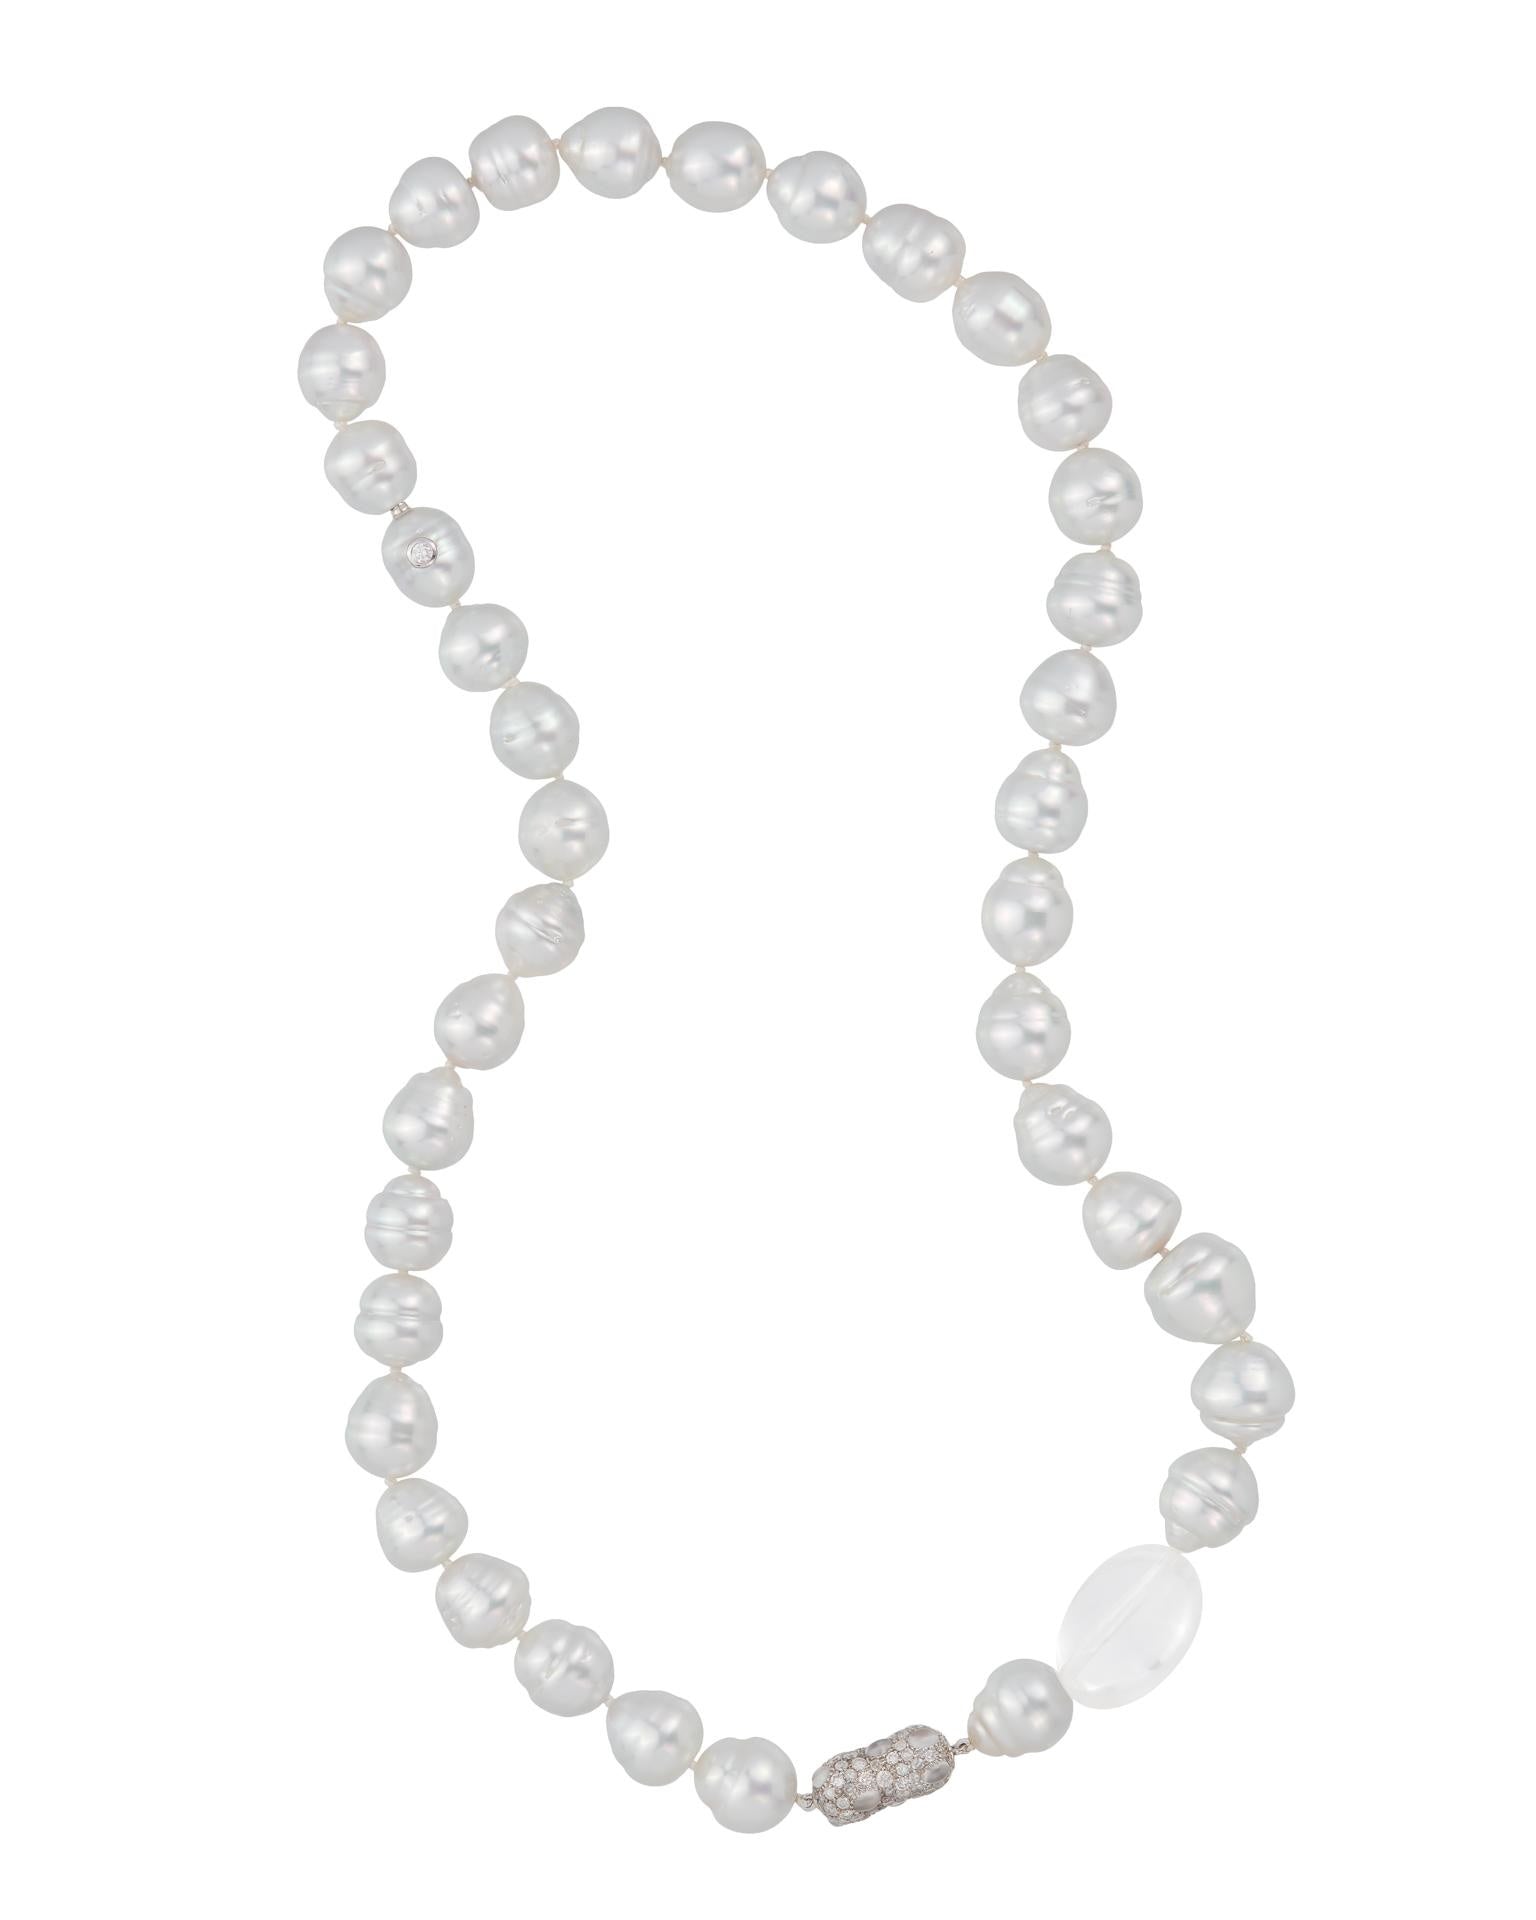 Betsey Johnson Torsade Enhancers HUGE Silver Sugar Skull Crown Pearl  Necklace | eBay